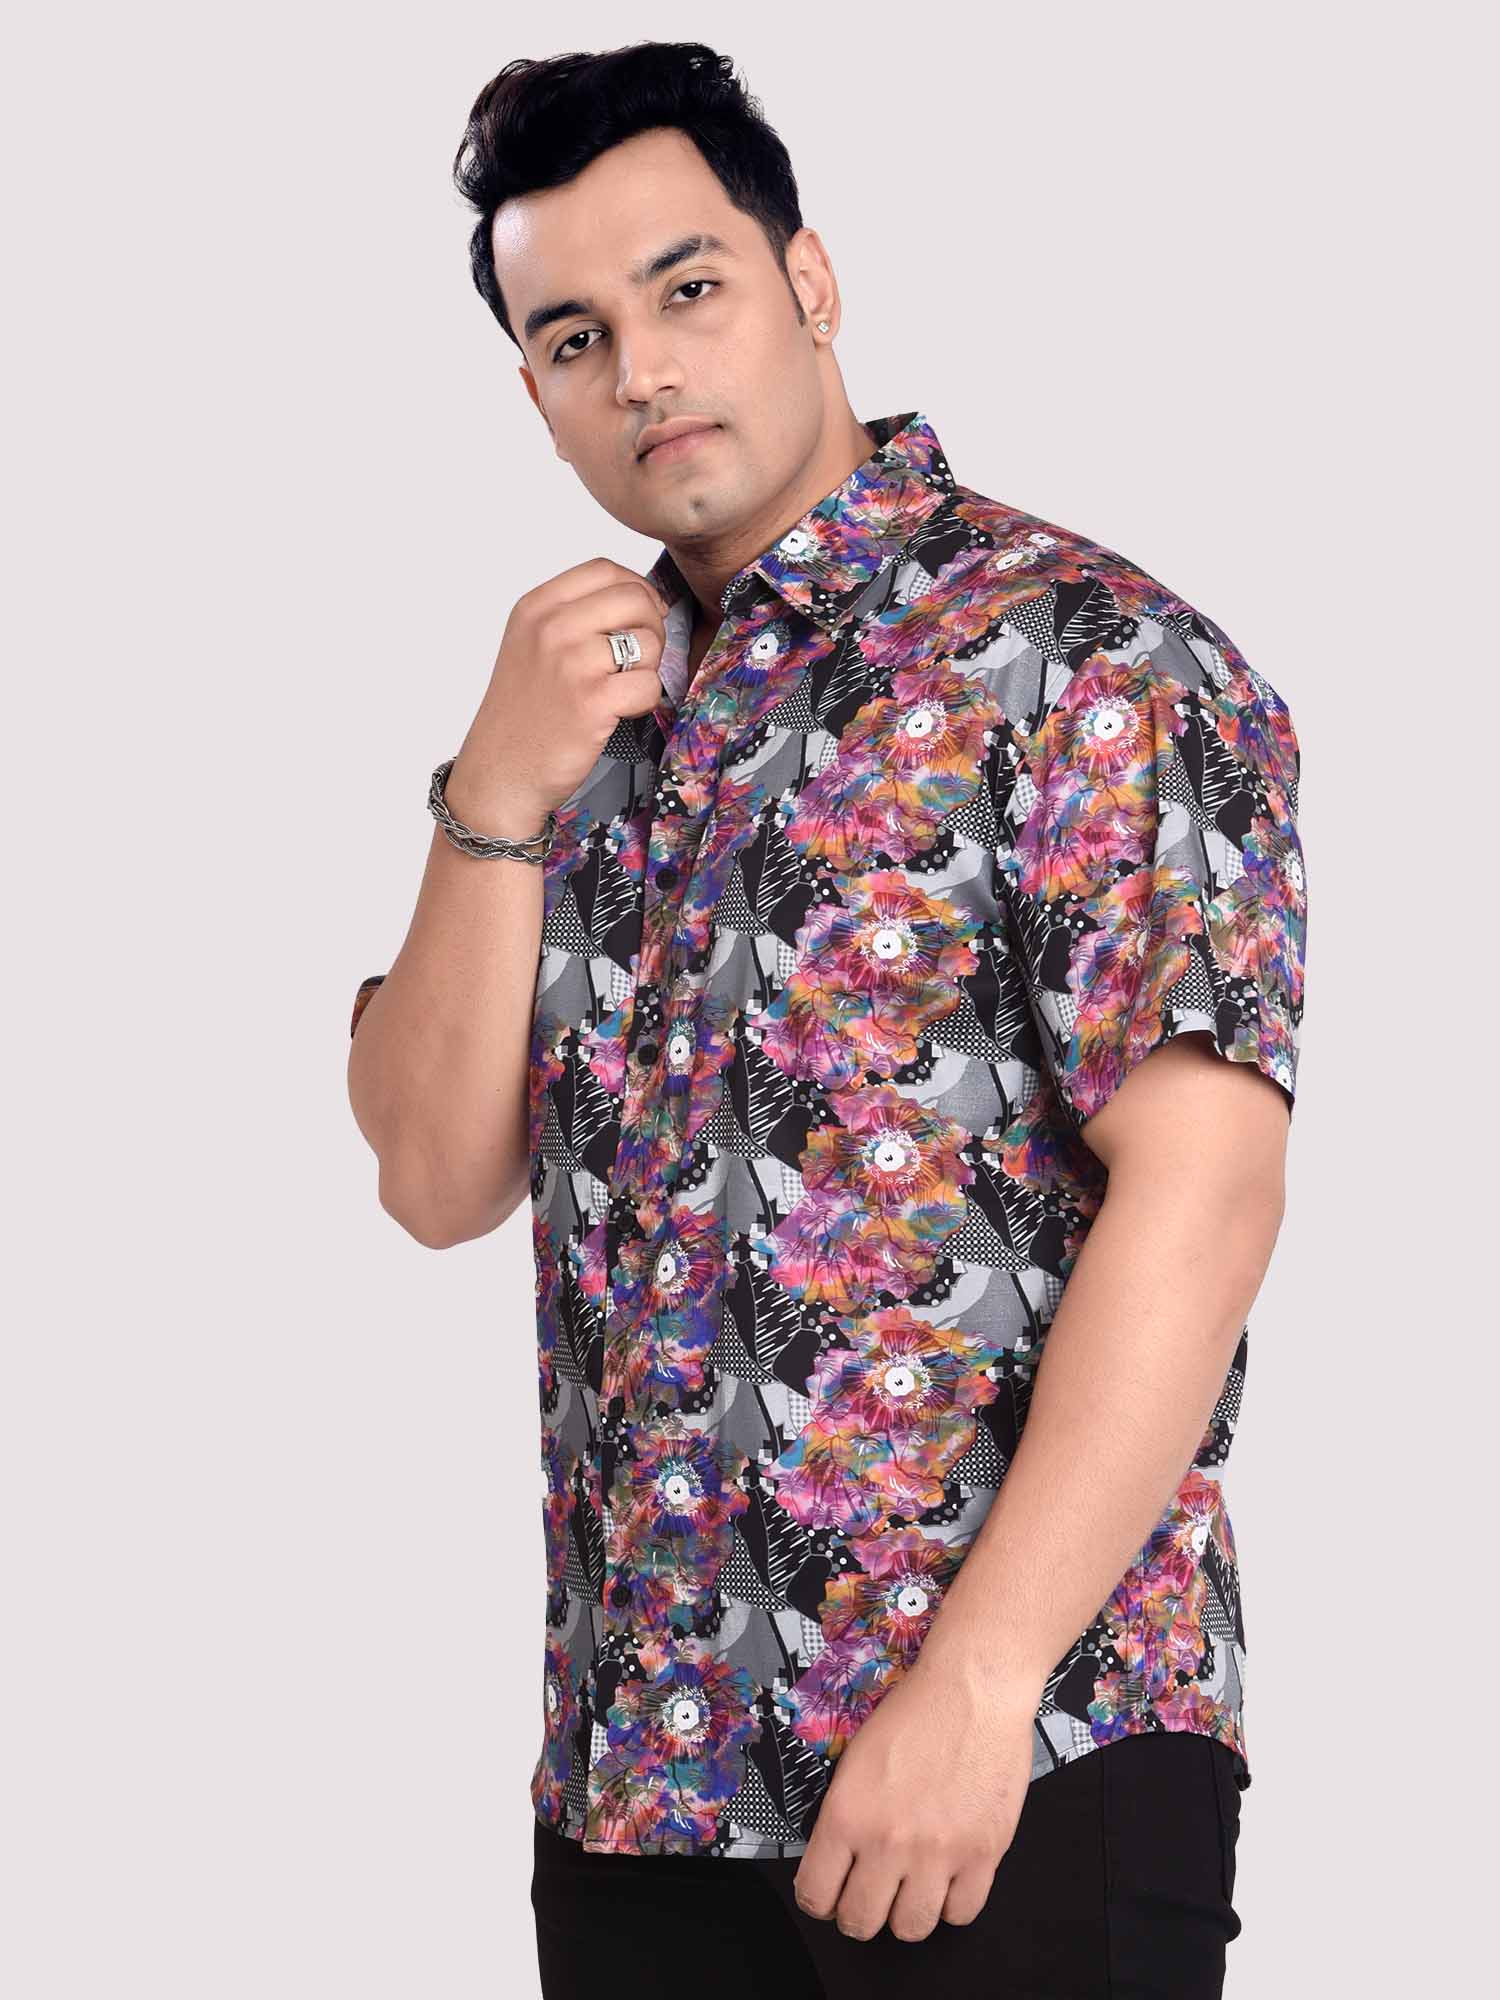 Painterly Digital Printed Shirt Men's Plus Size